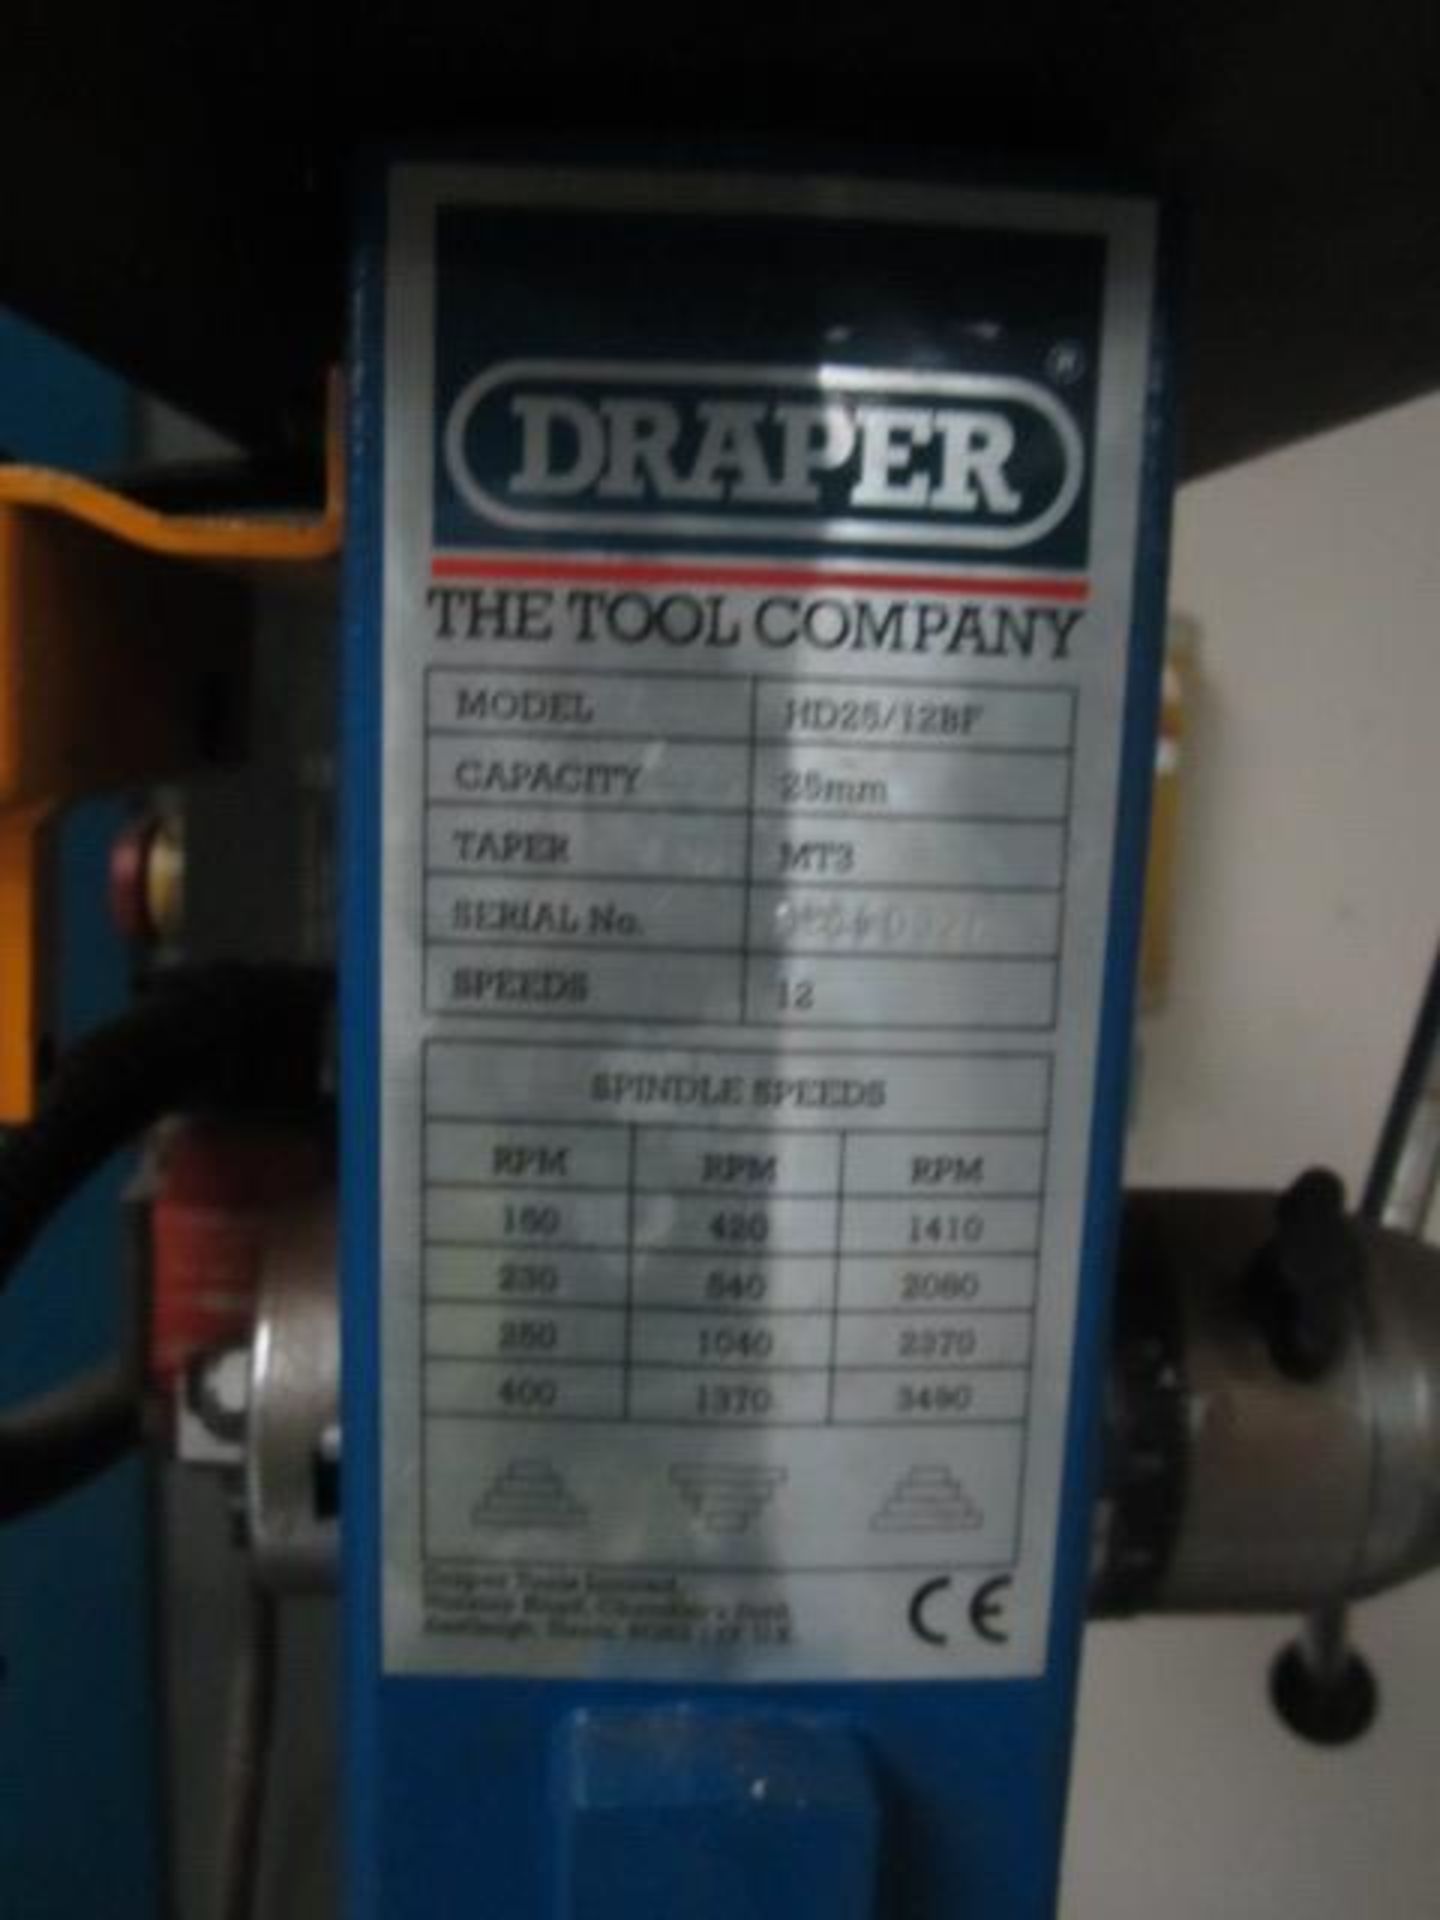 Draper HD25/12BF pillar drill, serial no. 99060020, capacity 25mm, Taper MT3 speeds 12, rpm 150- - - Image 4 of 4